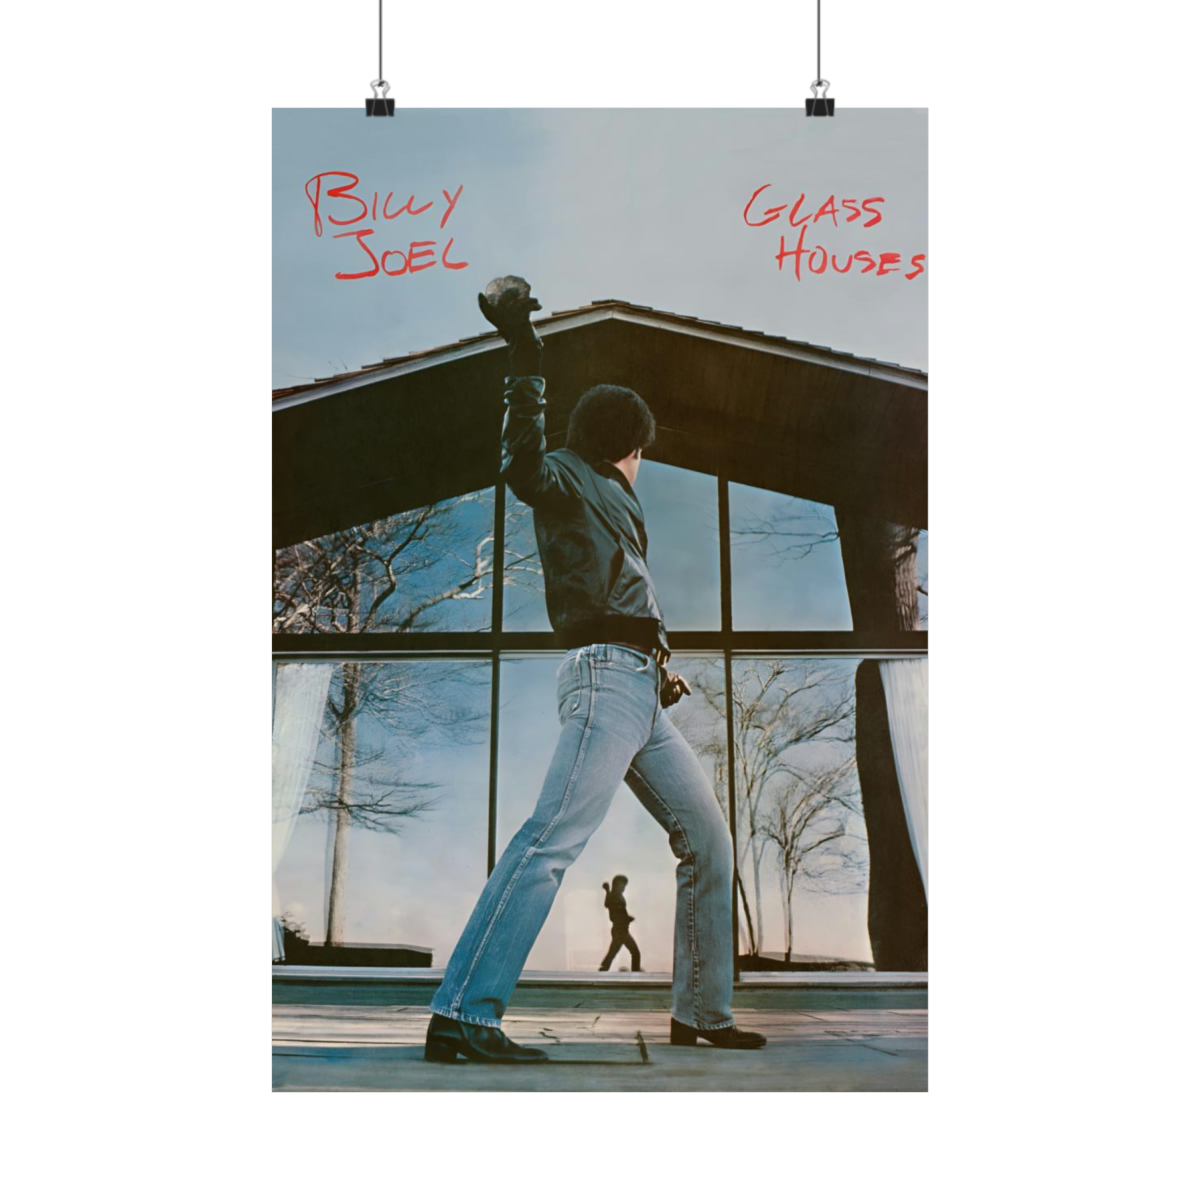 Billy Joel Poster, Billy Joel Glass Houses album Poster